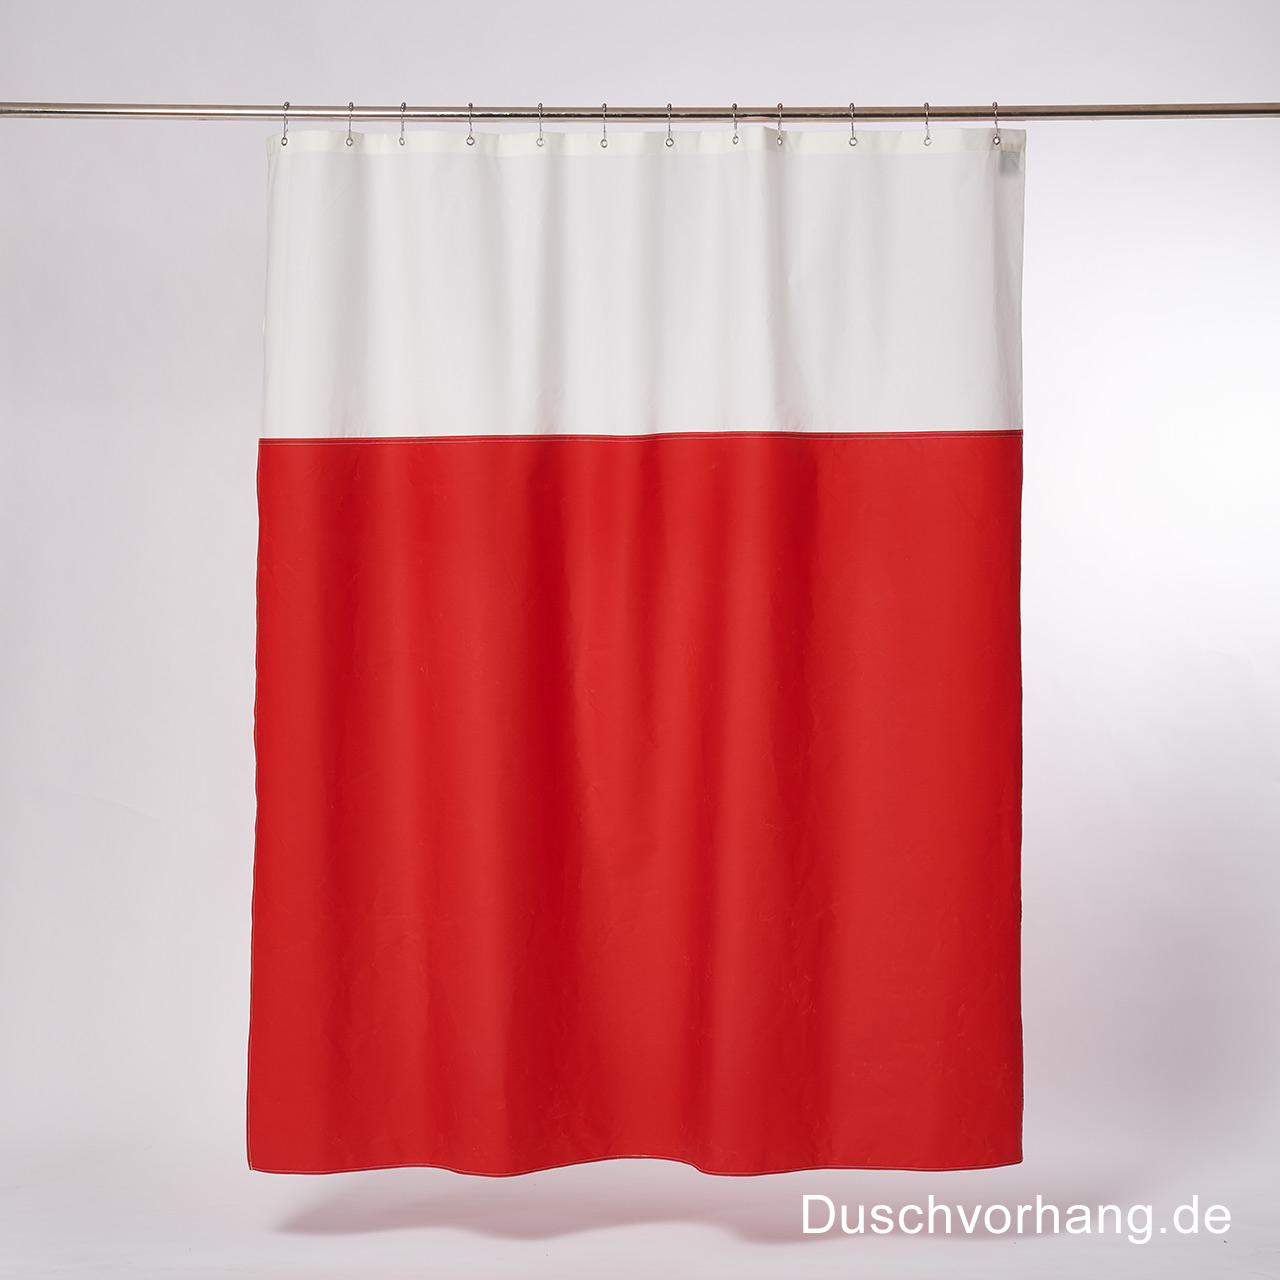 Duwax Textile Eco Friendly Shower, Red White Shower Curtain